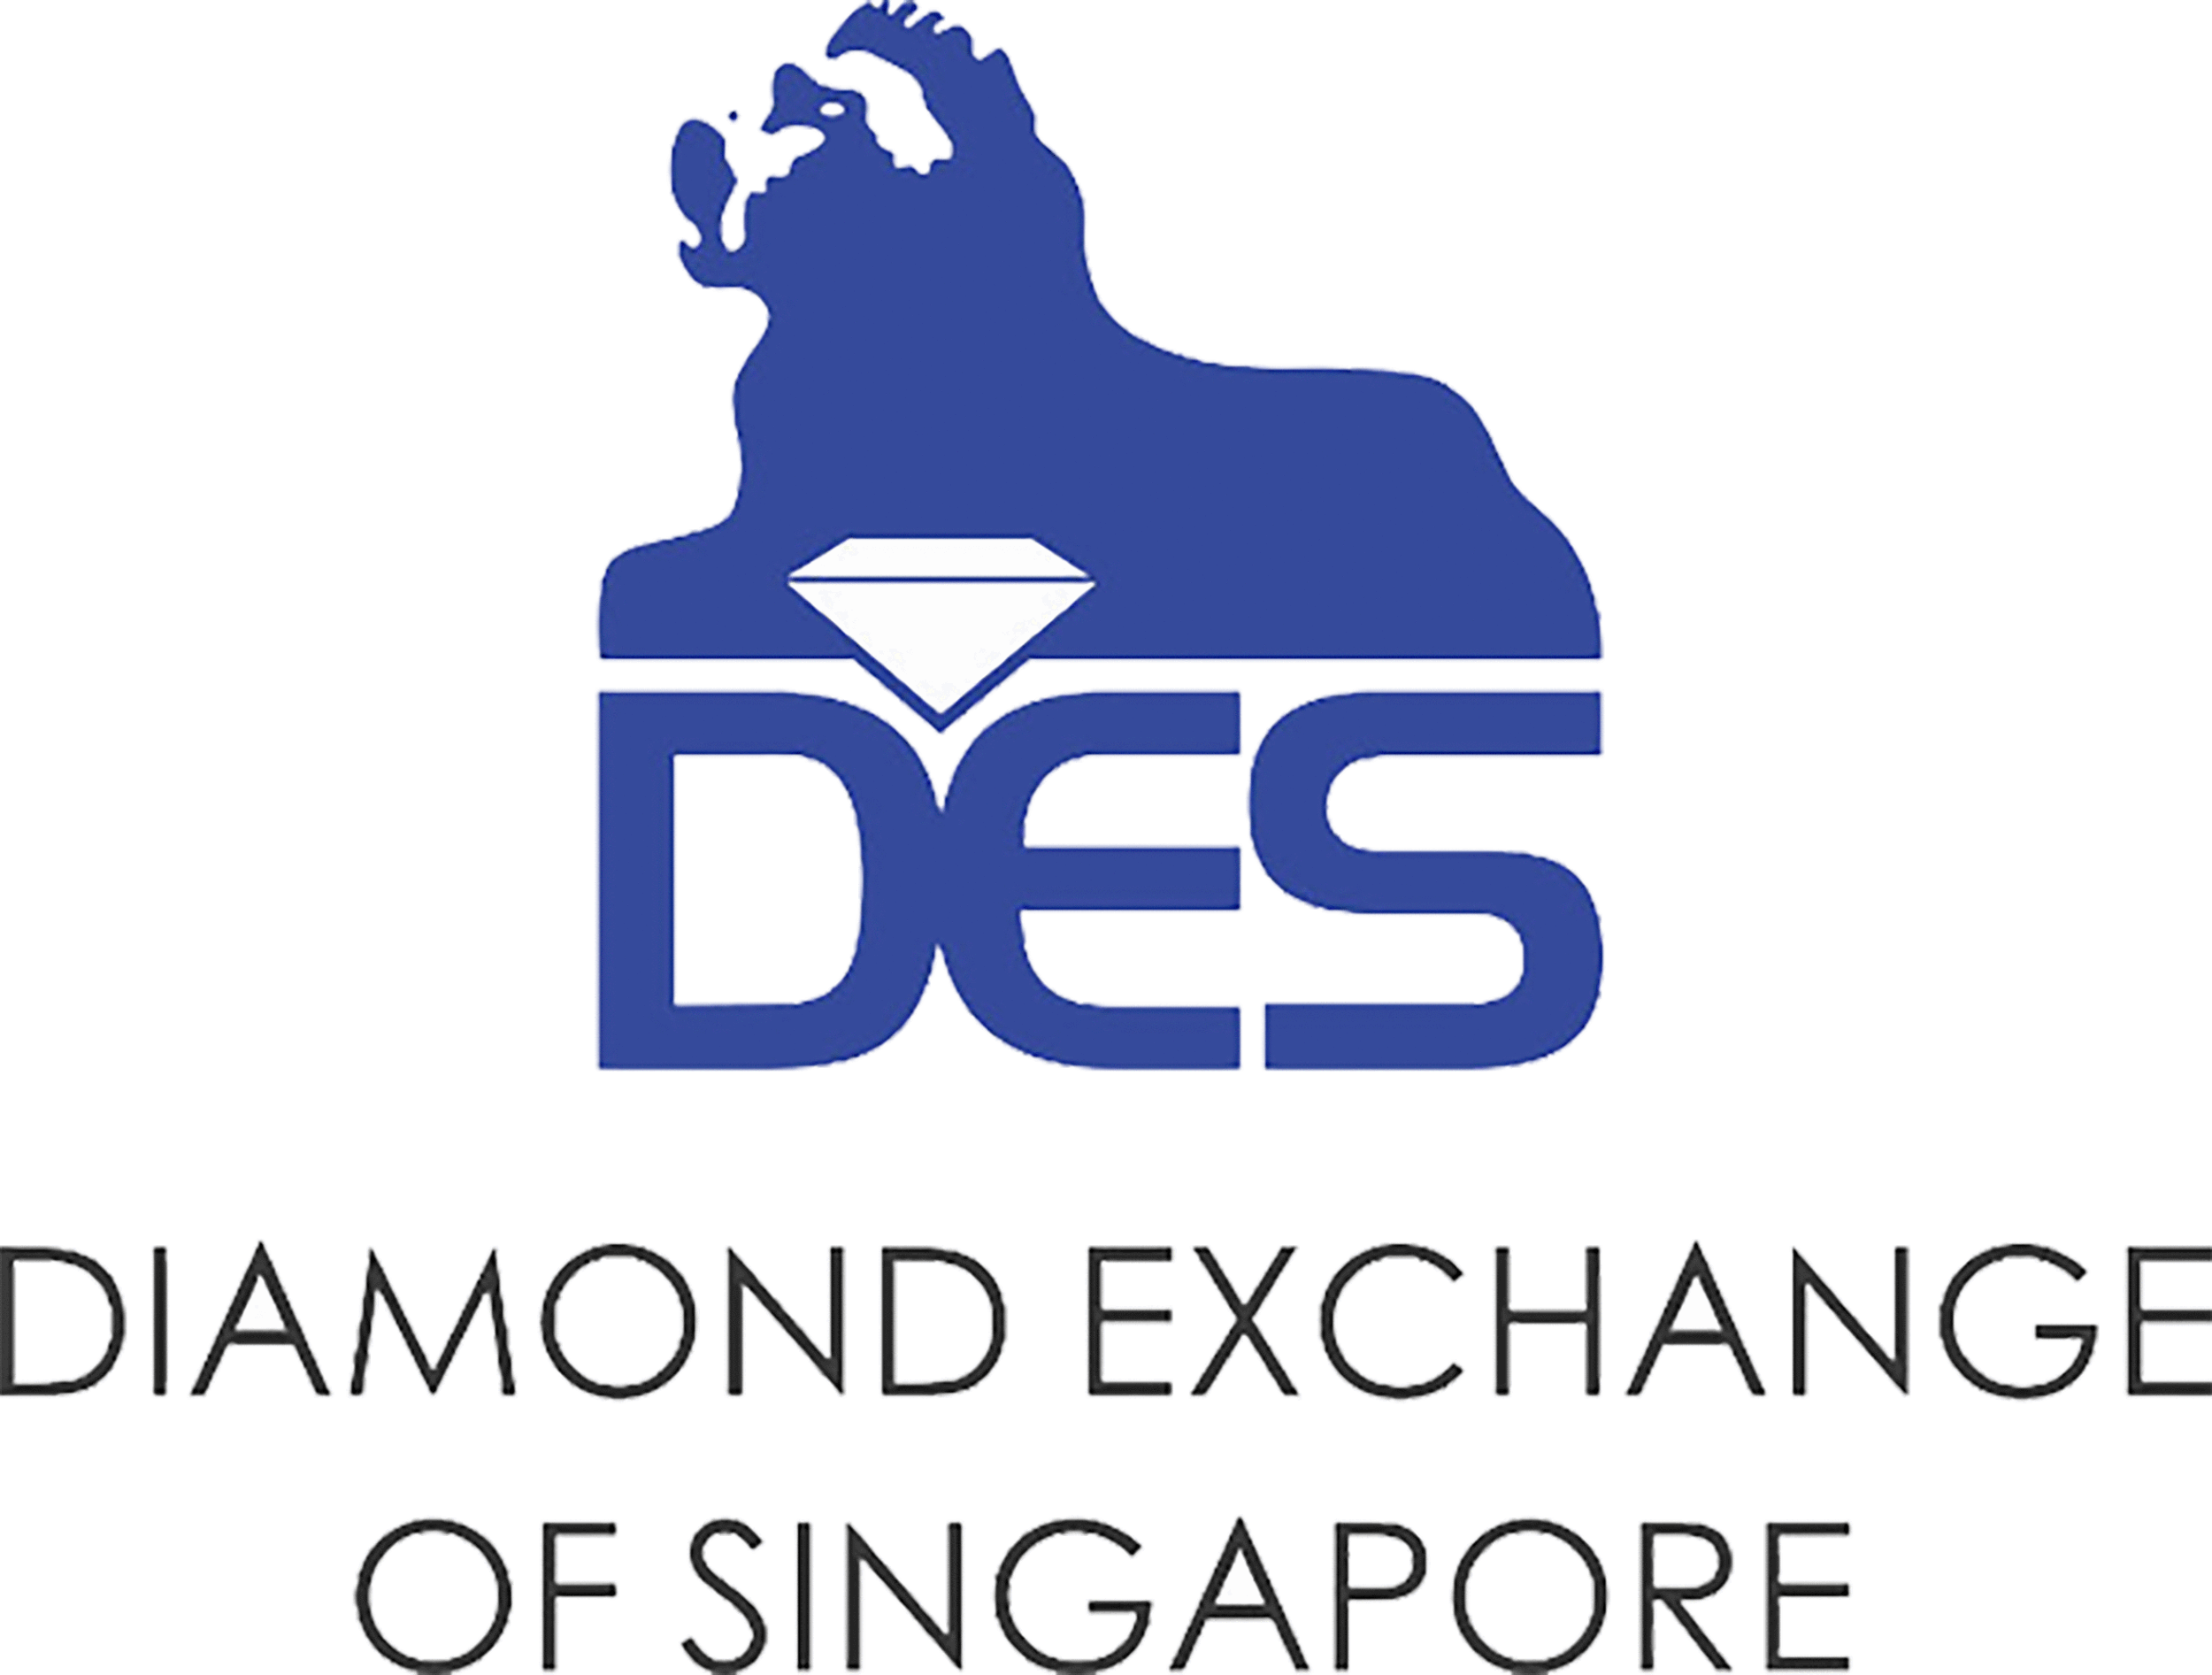 DES - Diamond Exchange of Singapore